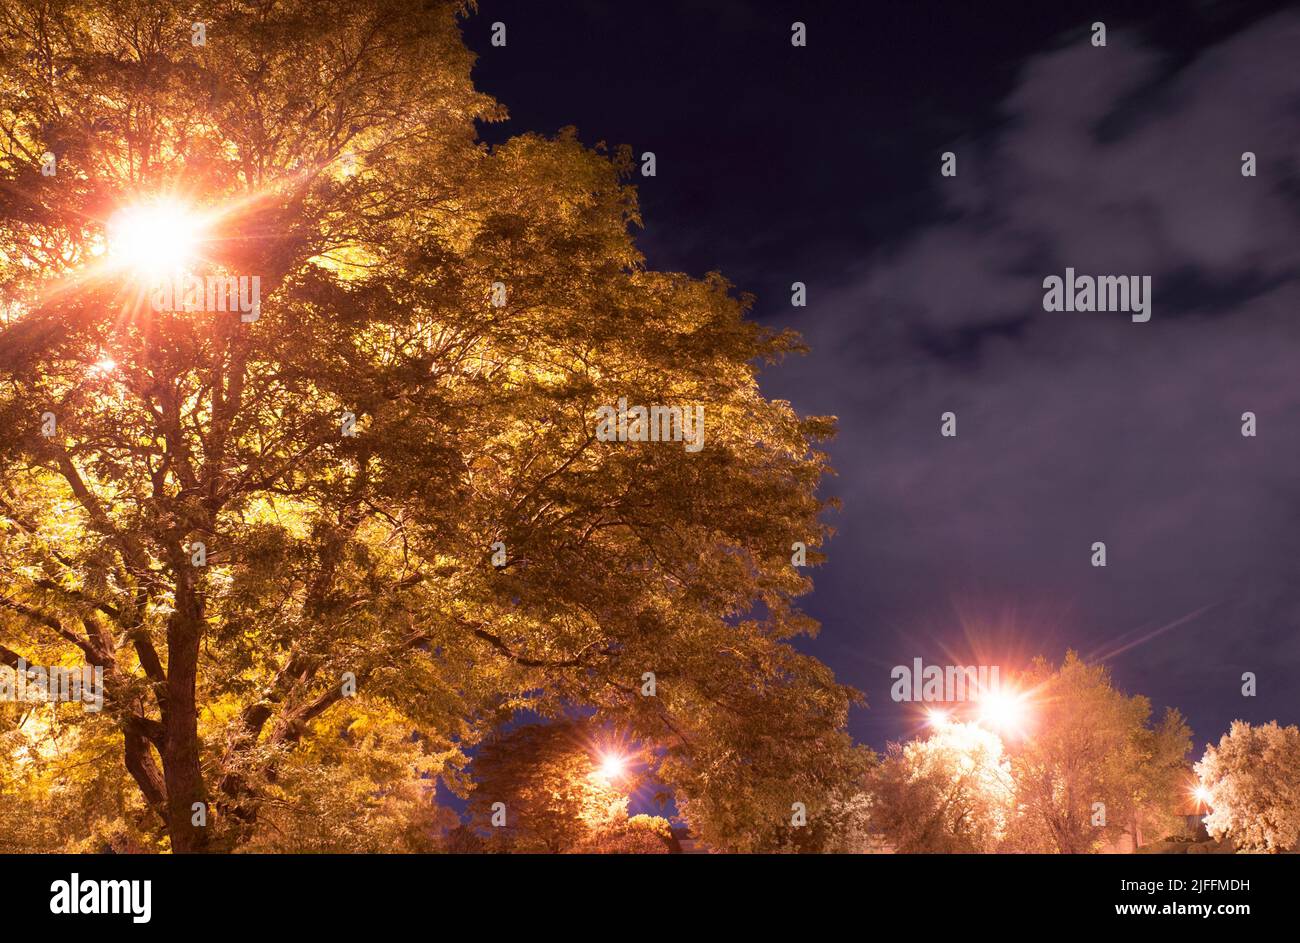 Streetlights shining through trees at night Stock Photo